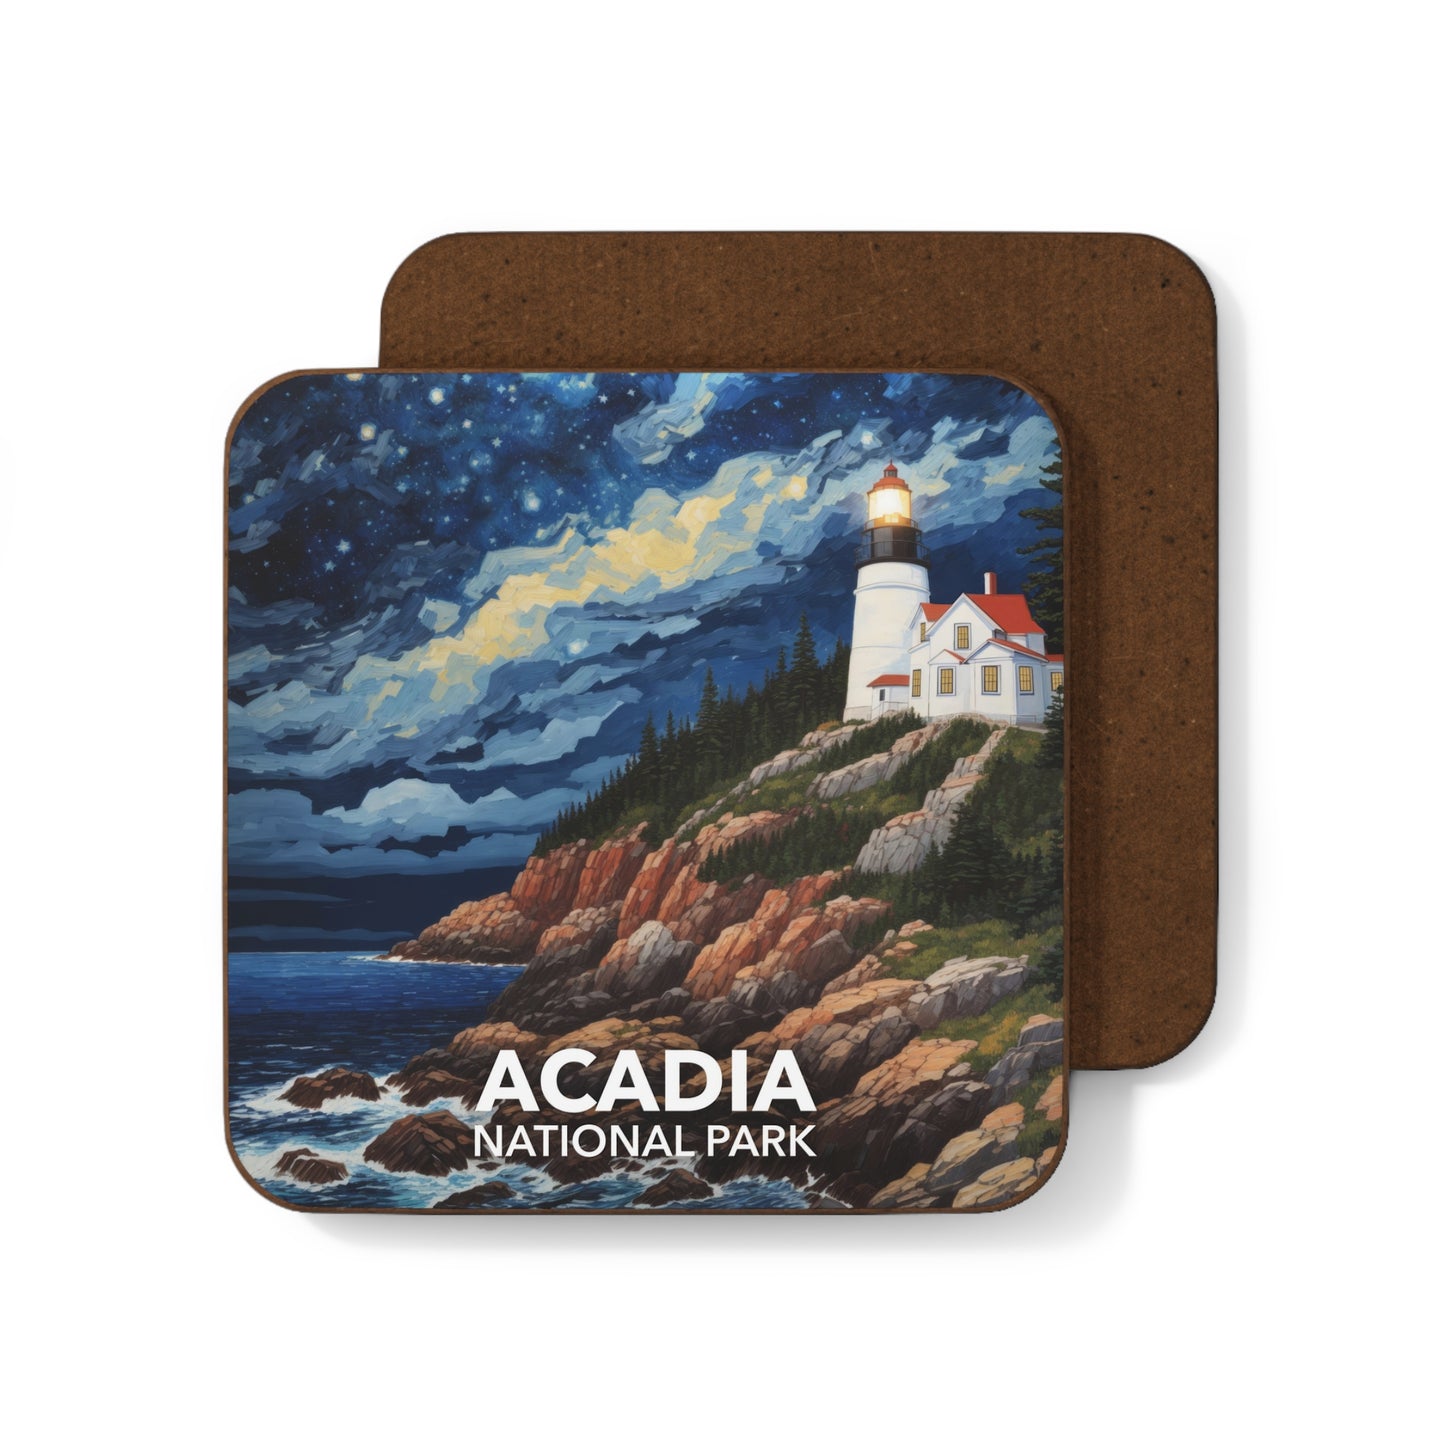 Acadia National Park Coaster - The Starry Night